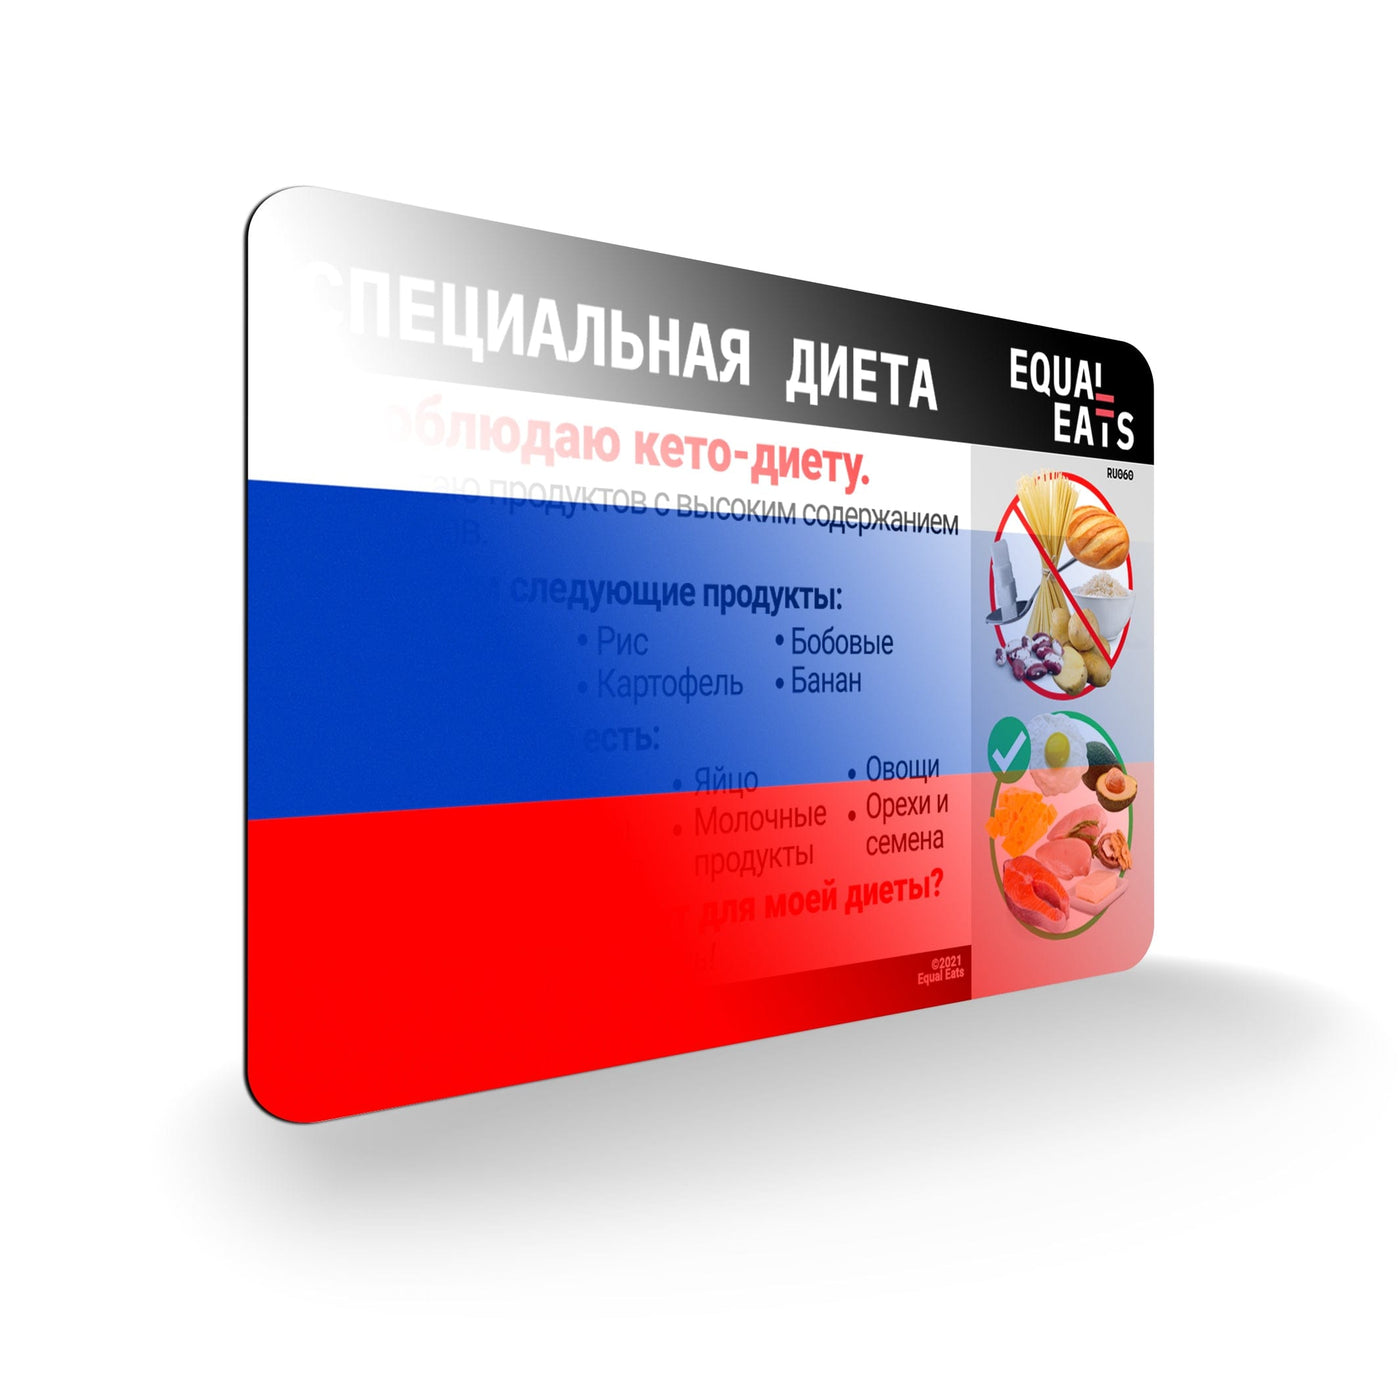 Russian Keto Diet Card